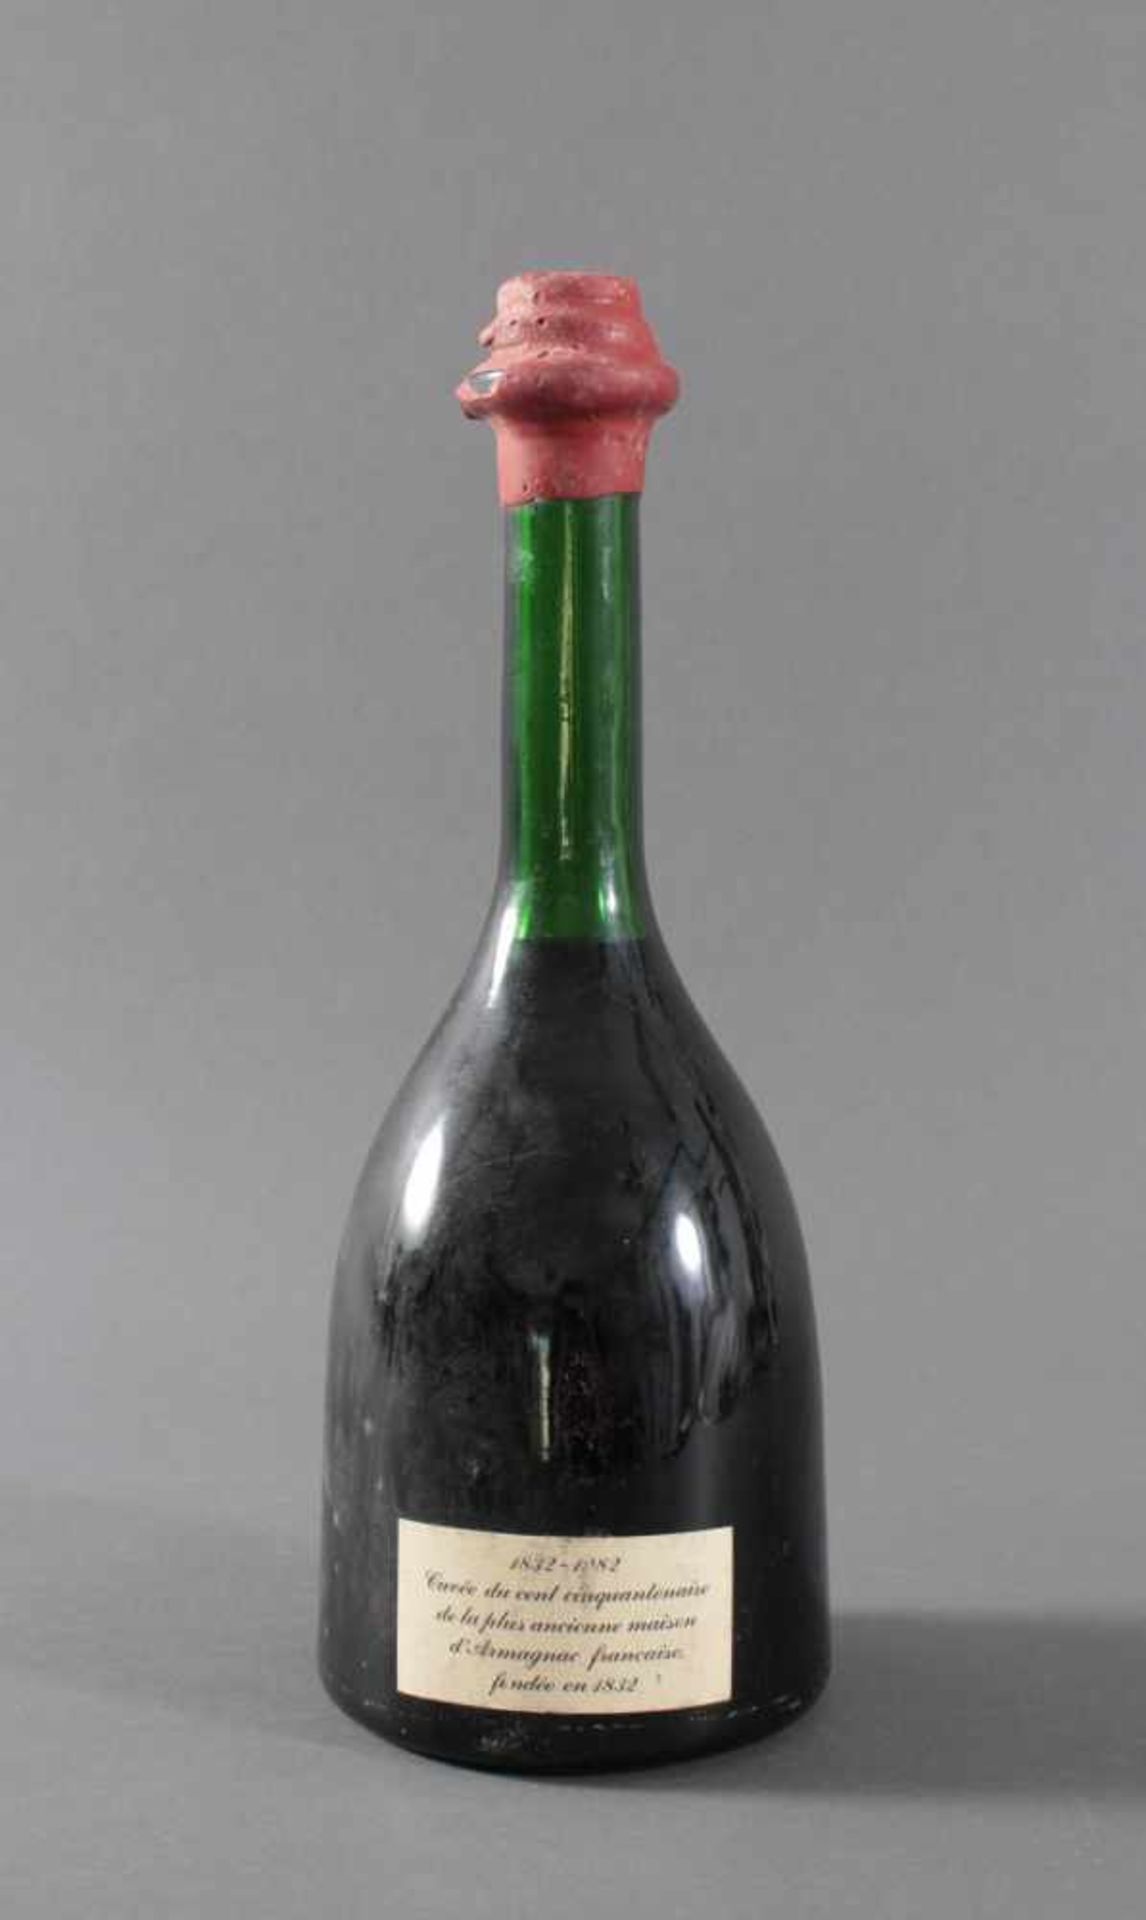 Magnumflasche Armagnac, Hors d Age CastaredeLavardac France, 1,5 Liter, 45% vol. - Image 2 of 2